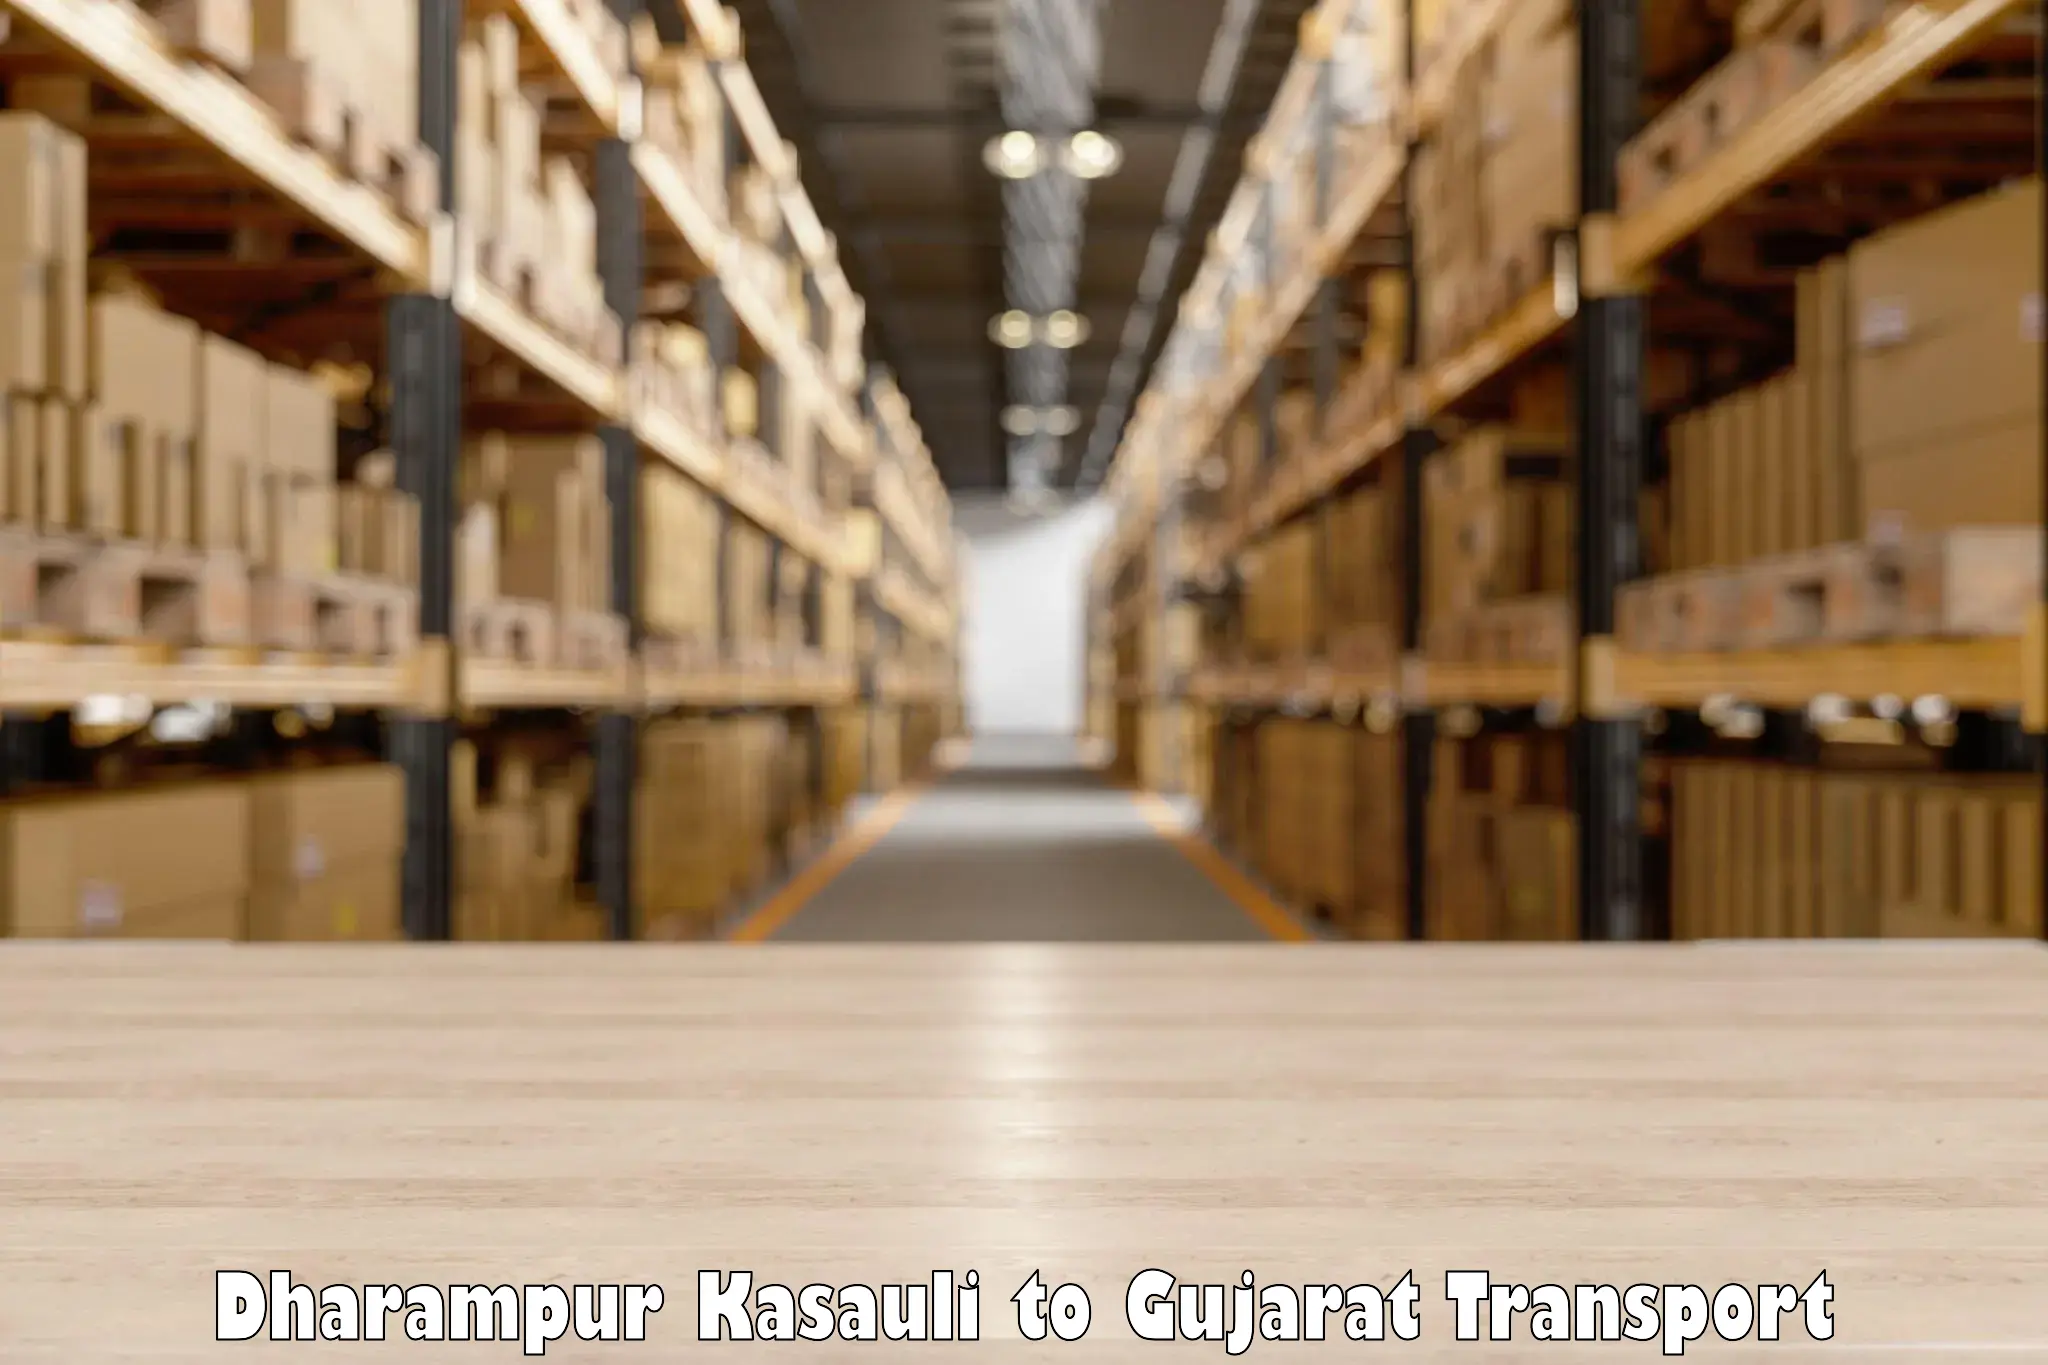 Pick up transport service Dharampur Kasauli to Himmatnagar